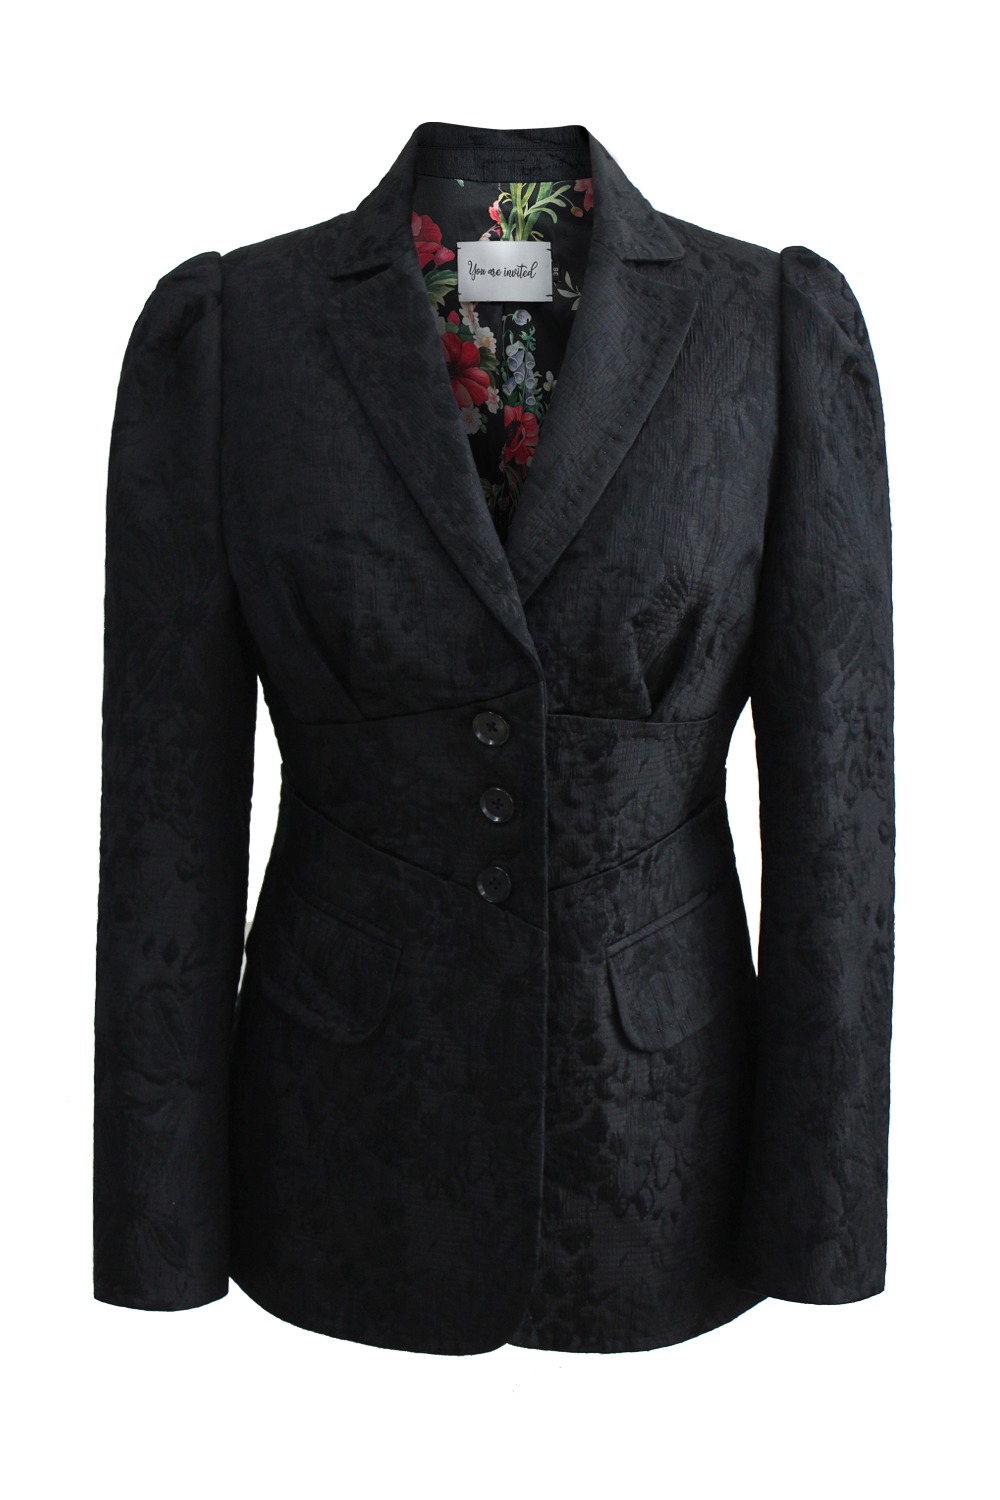 [Order Made] Define silhouette jacket (Jacquard Black)